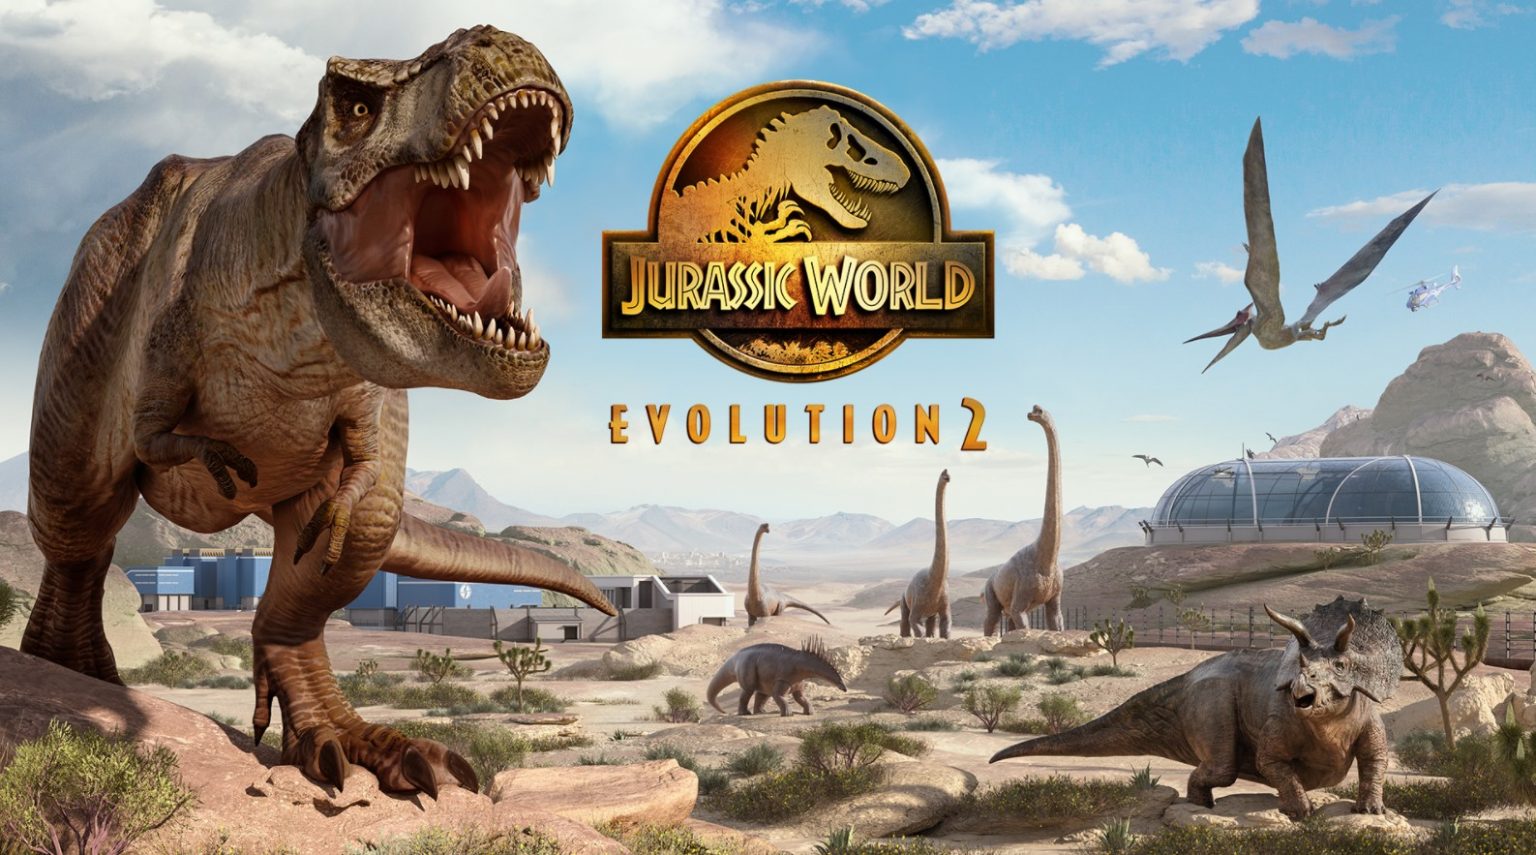 Jurassic World Evolution 2 free pc game for Download